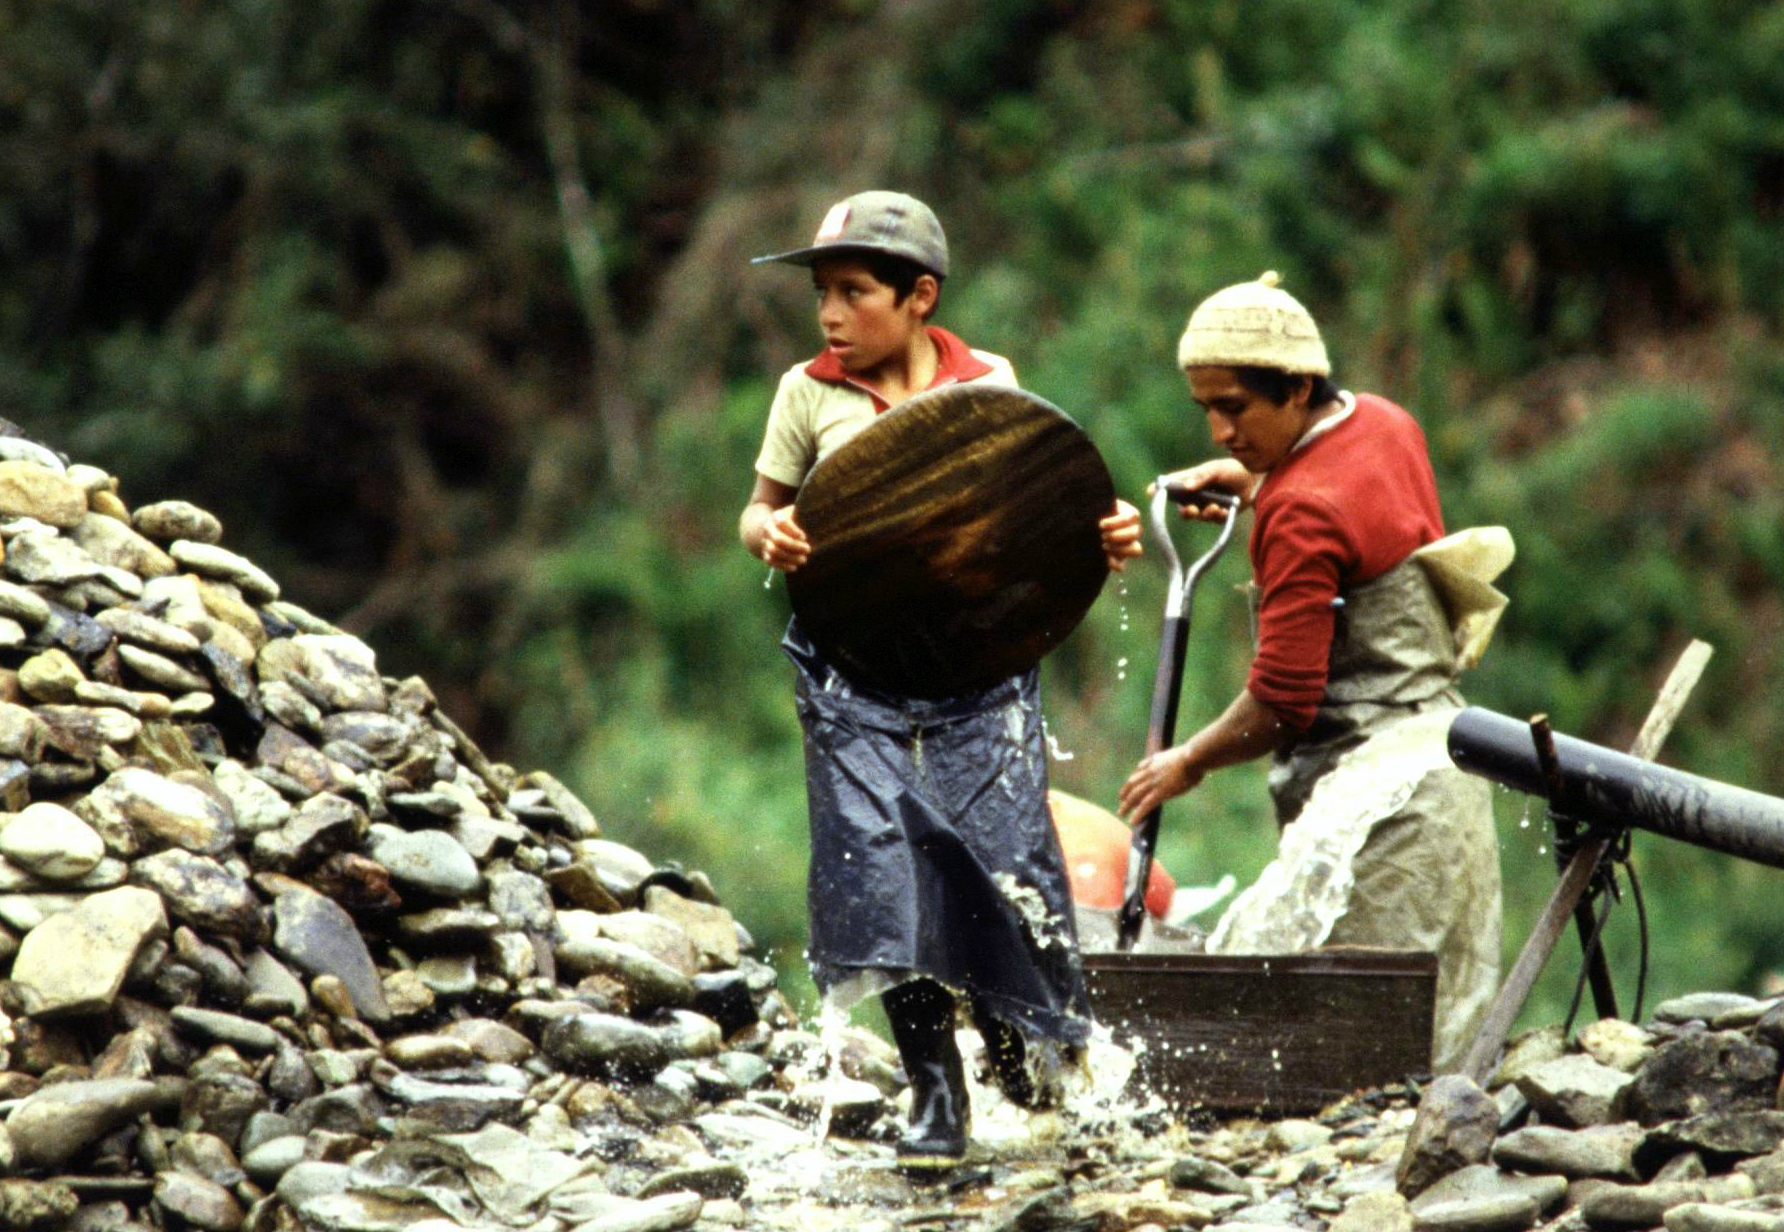 Child Labor in Morona Santiago